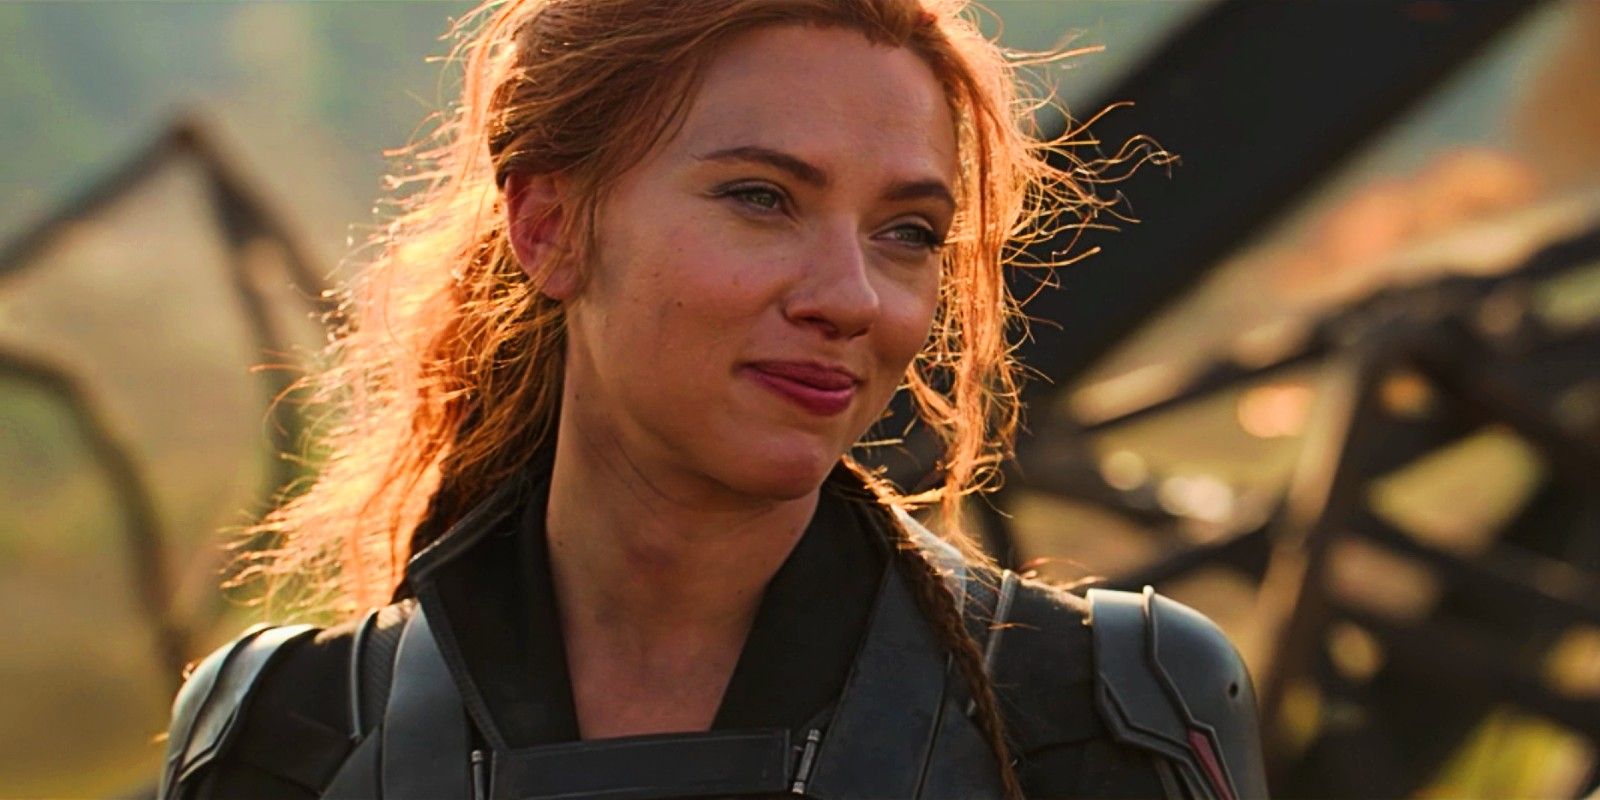 Scarlett Johansson as Black Widow smiling